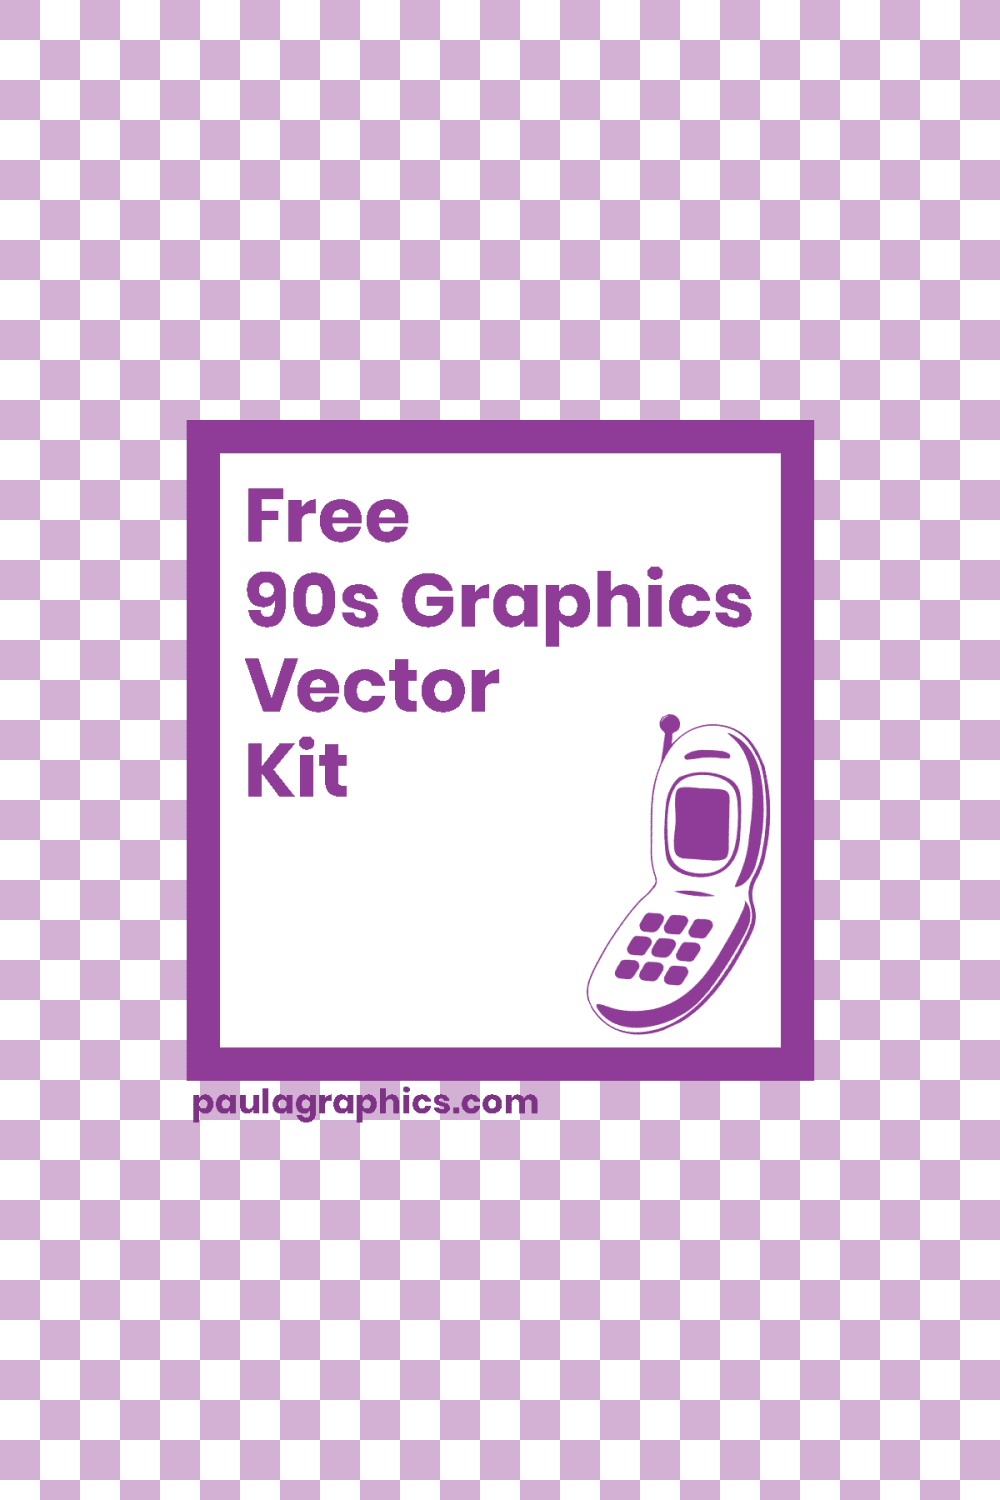 Free 90s Graphics Vector Kit - Free Vector Kit